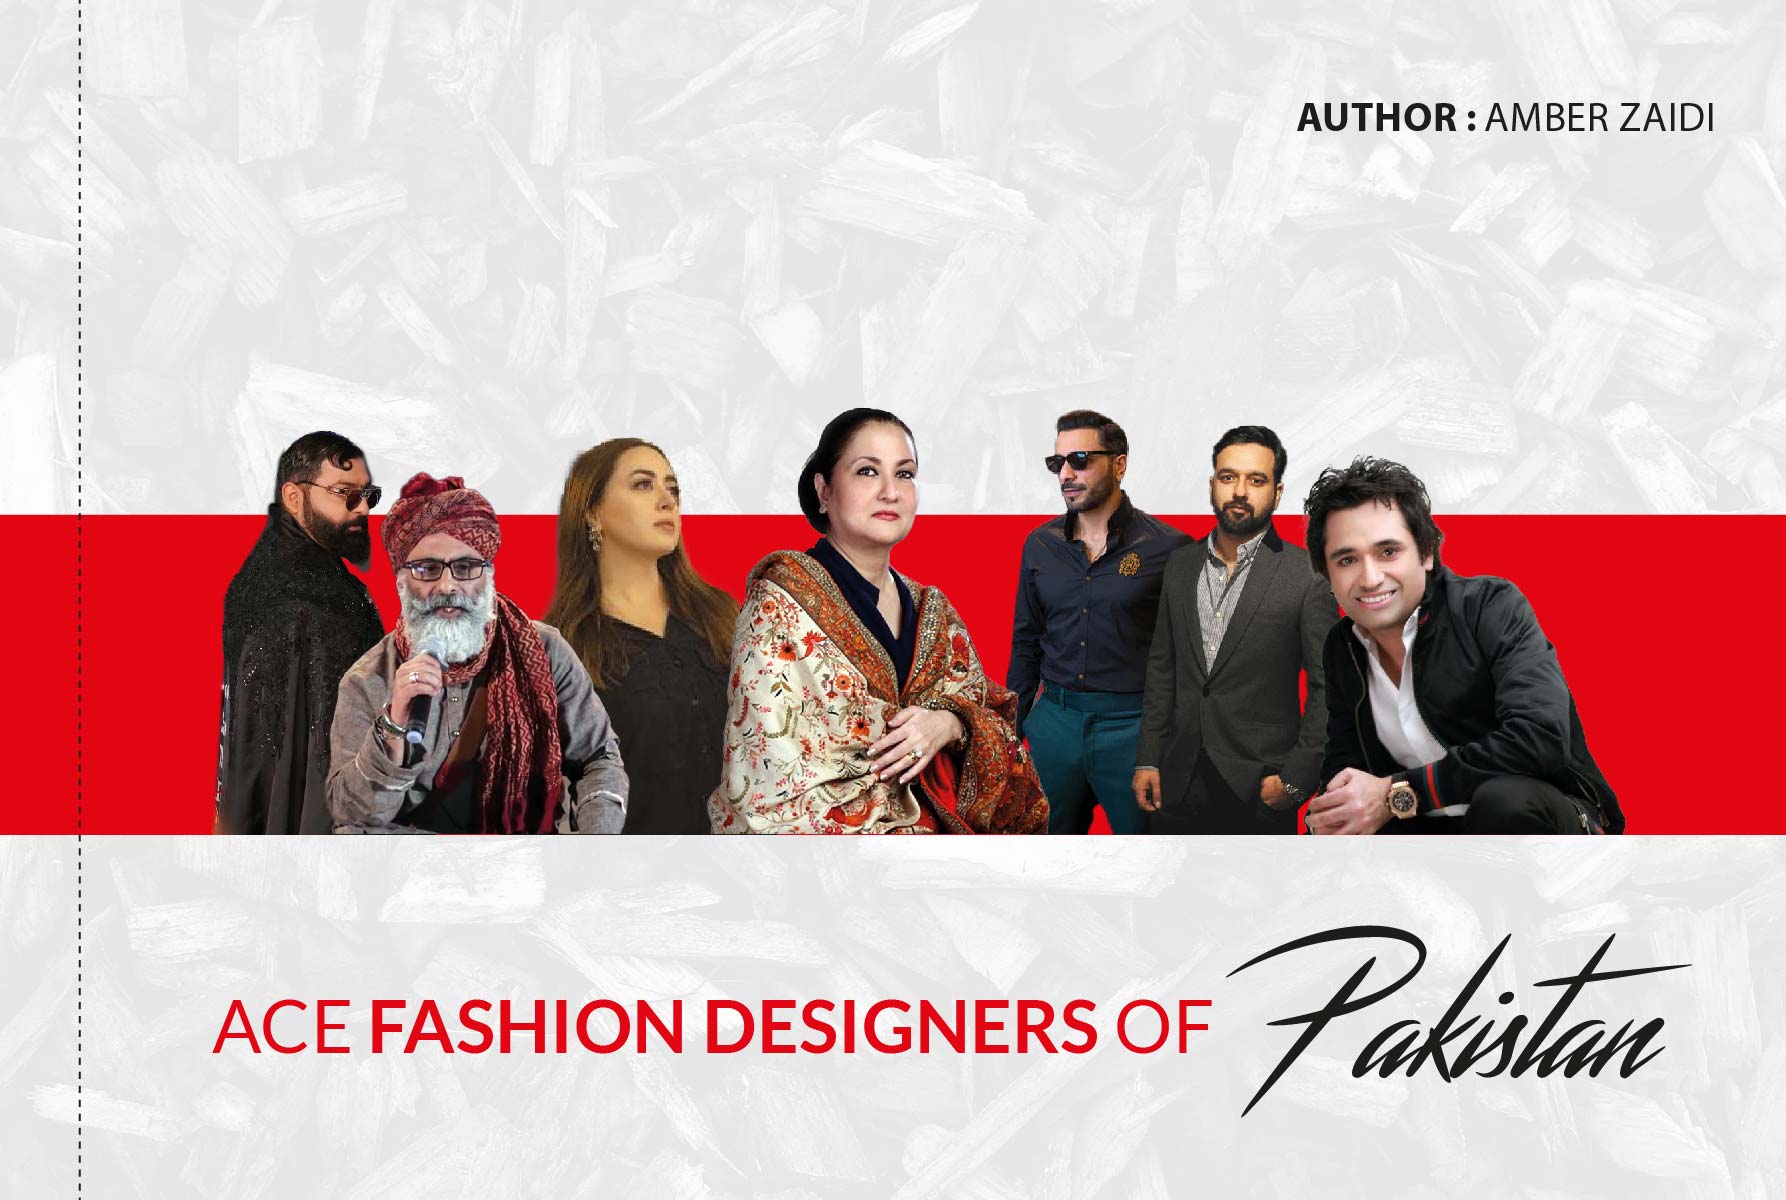 Ace fashion designers of Pakistan